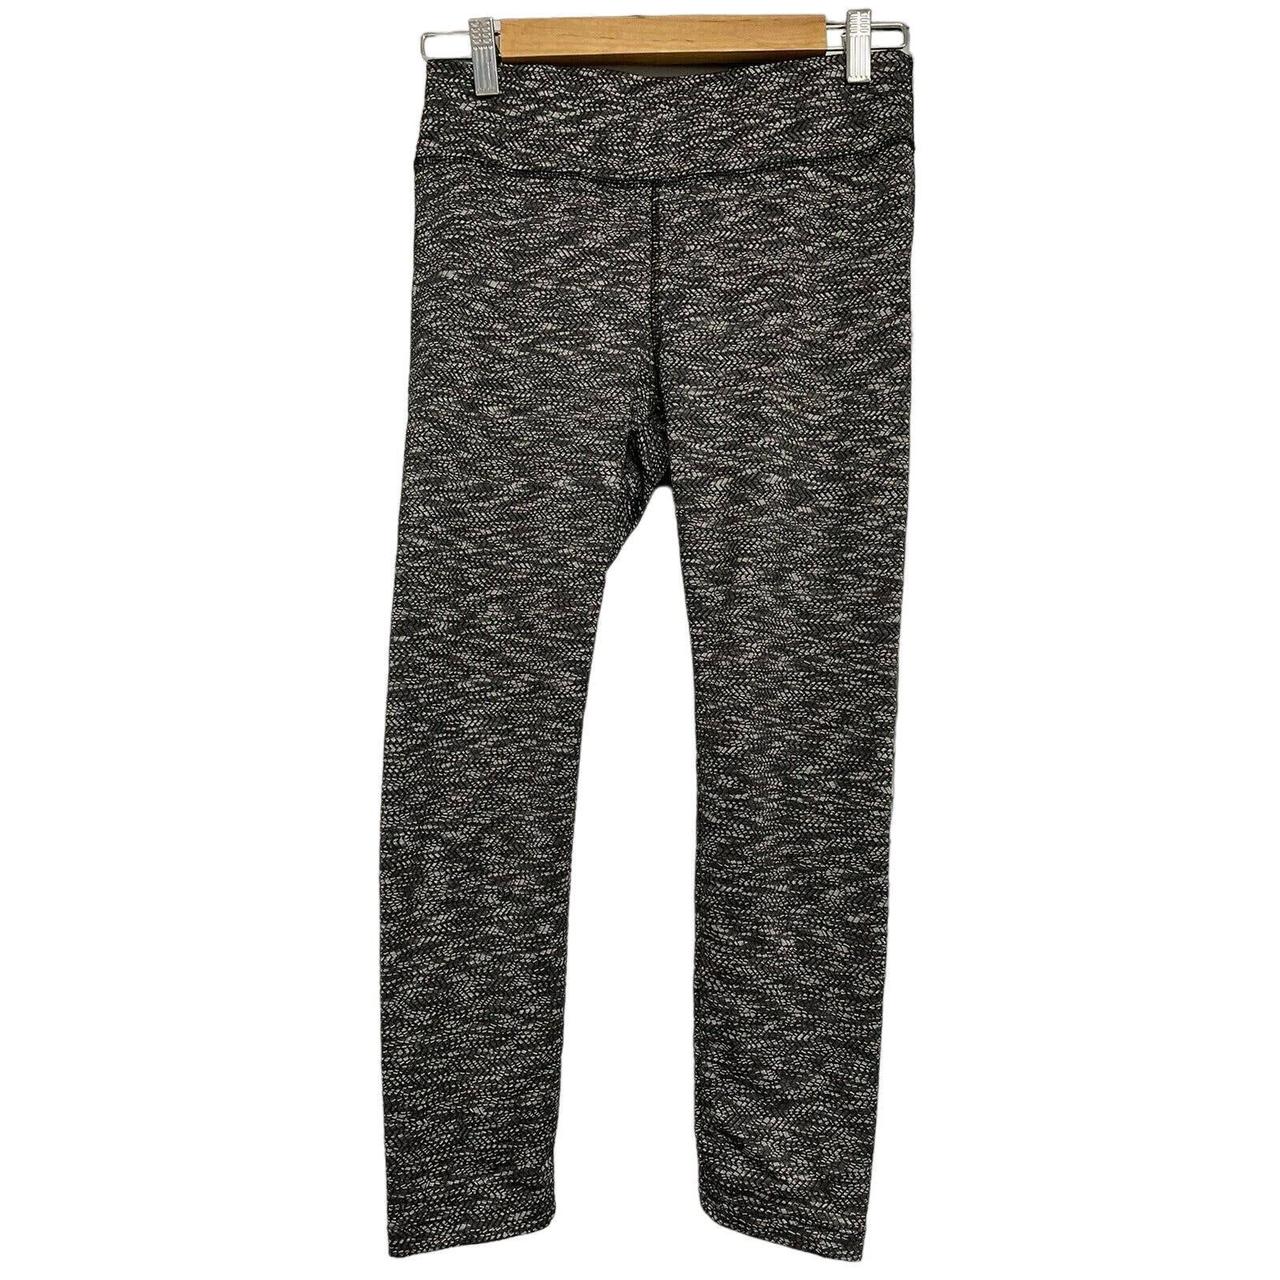 Spalding capri leggings pants black gray size - Depop